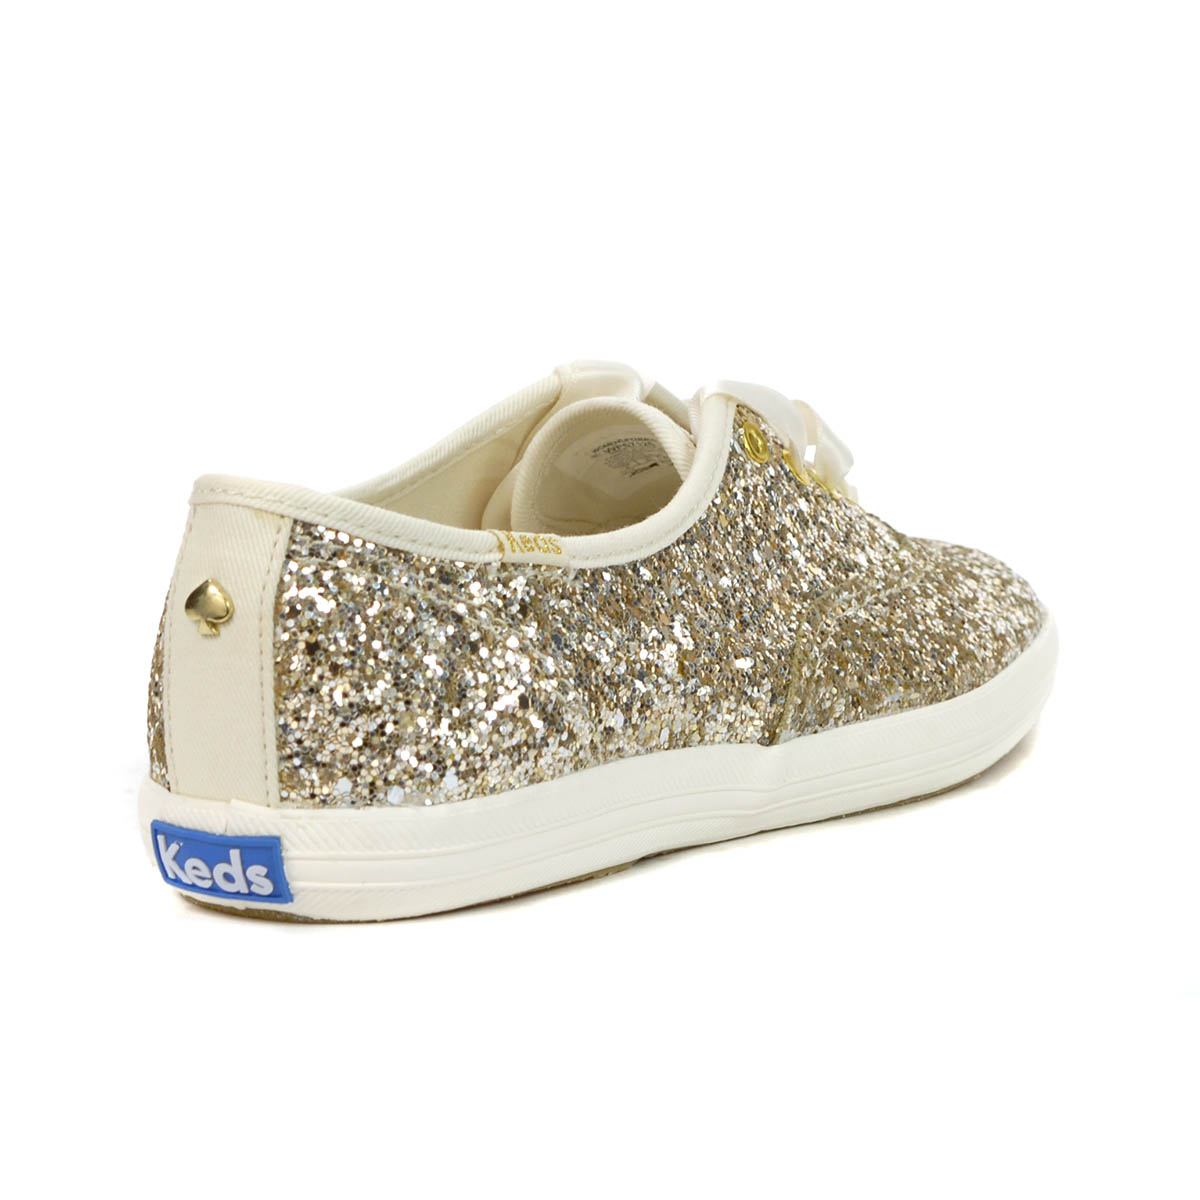 Keds x Kate Spade New York Champion Platinum Gold Glitter Sneakers WF57125  